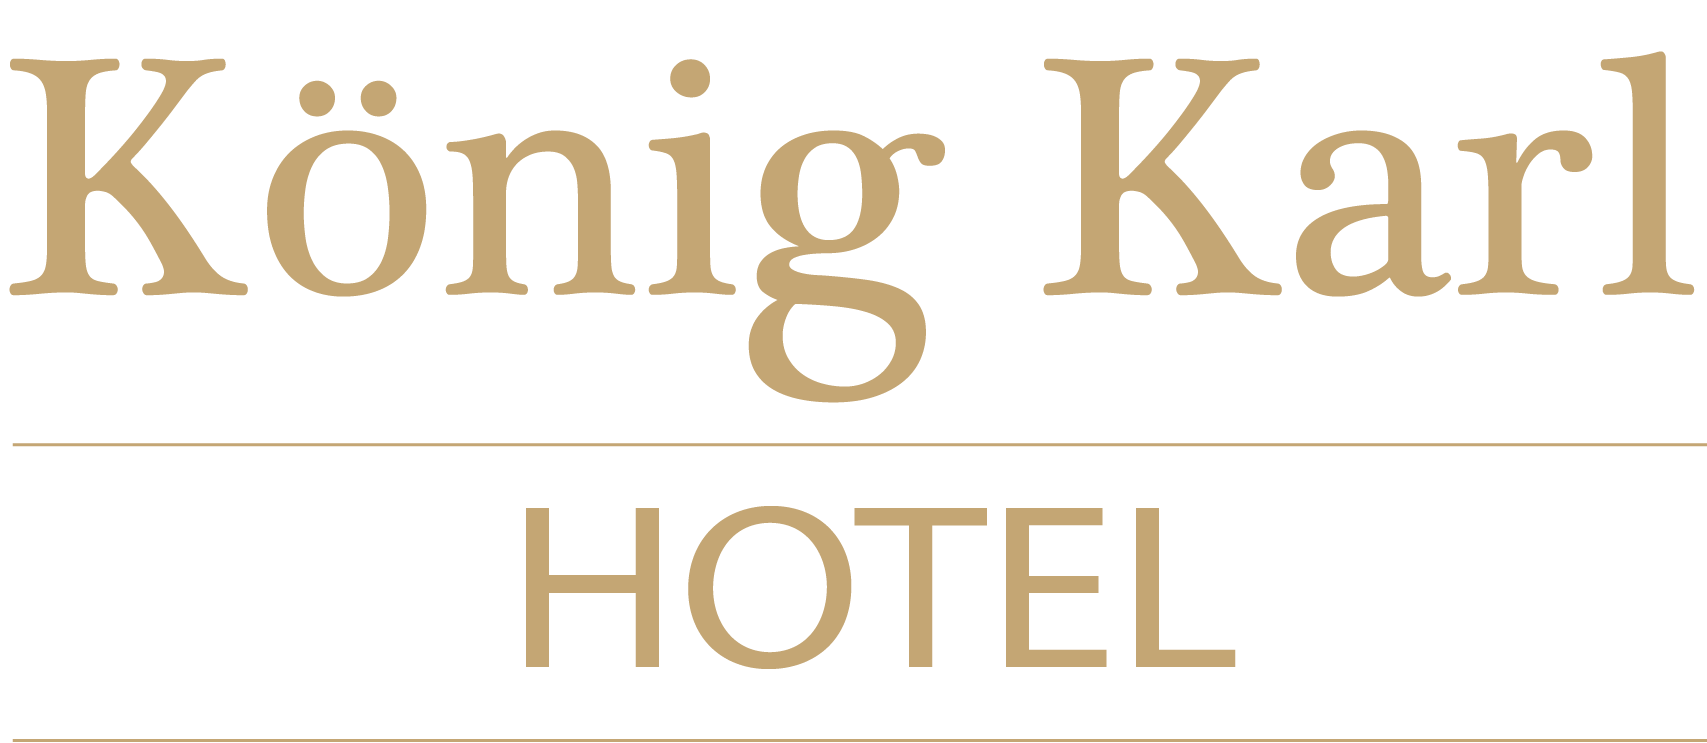 Hotel König Karl in Freudenstadt